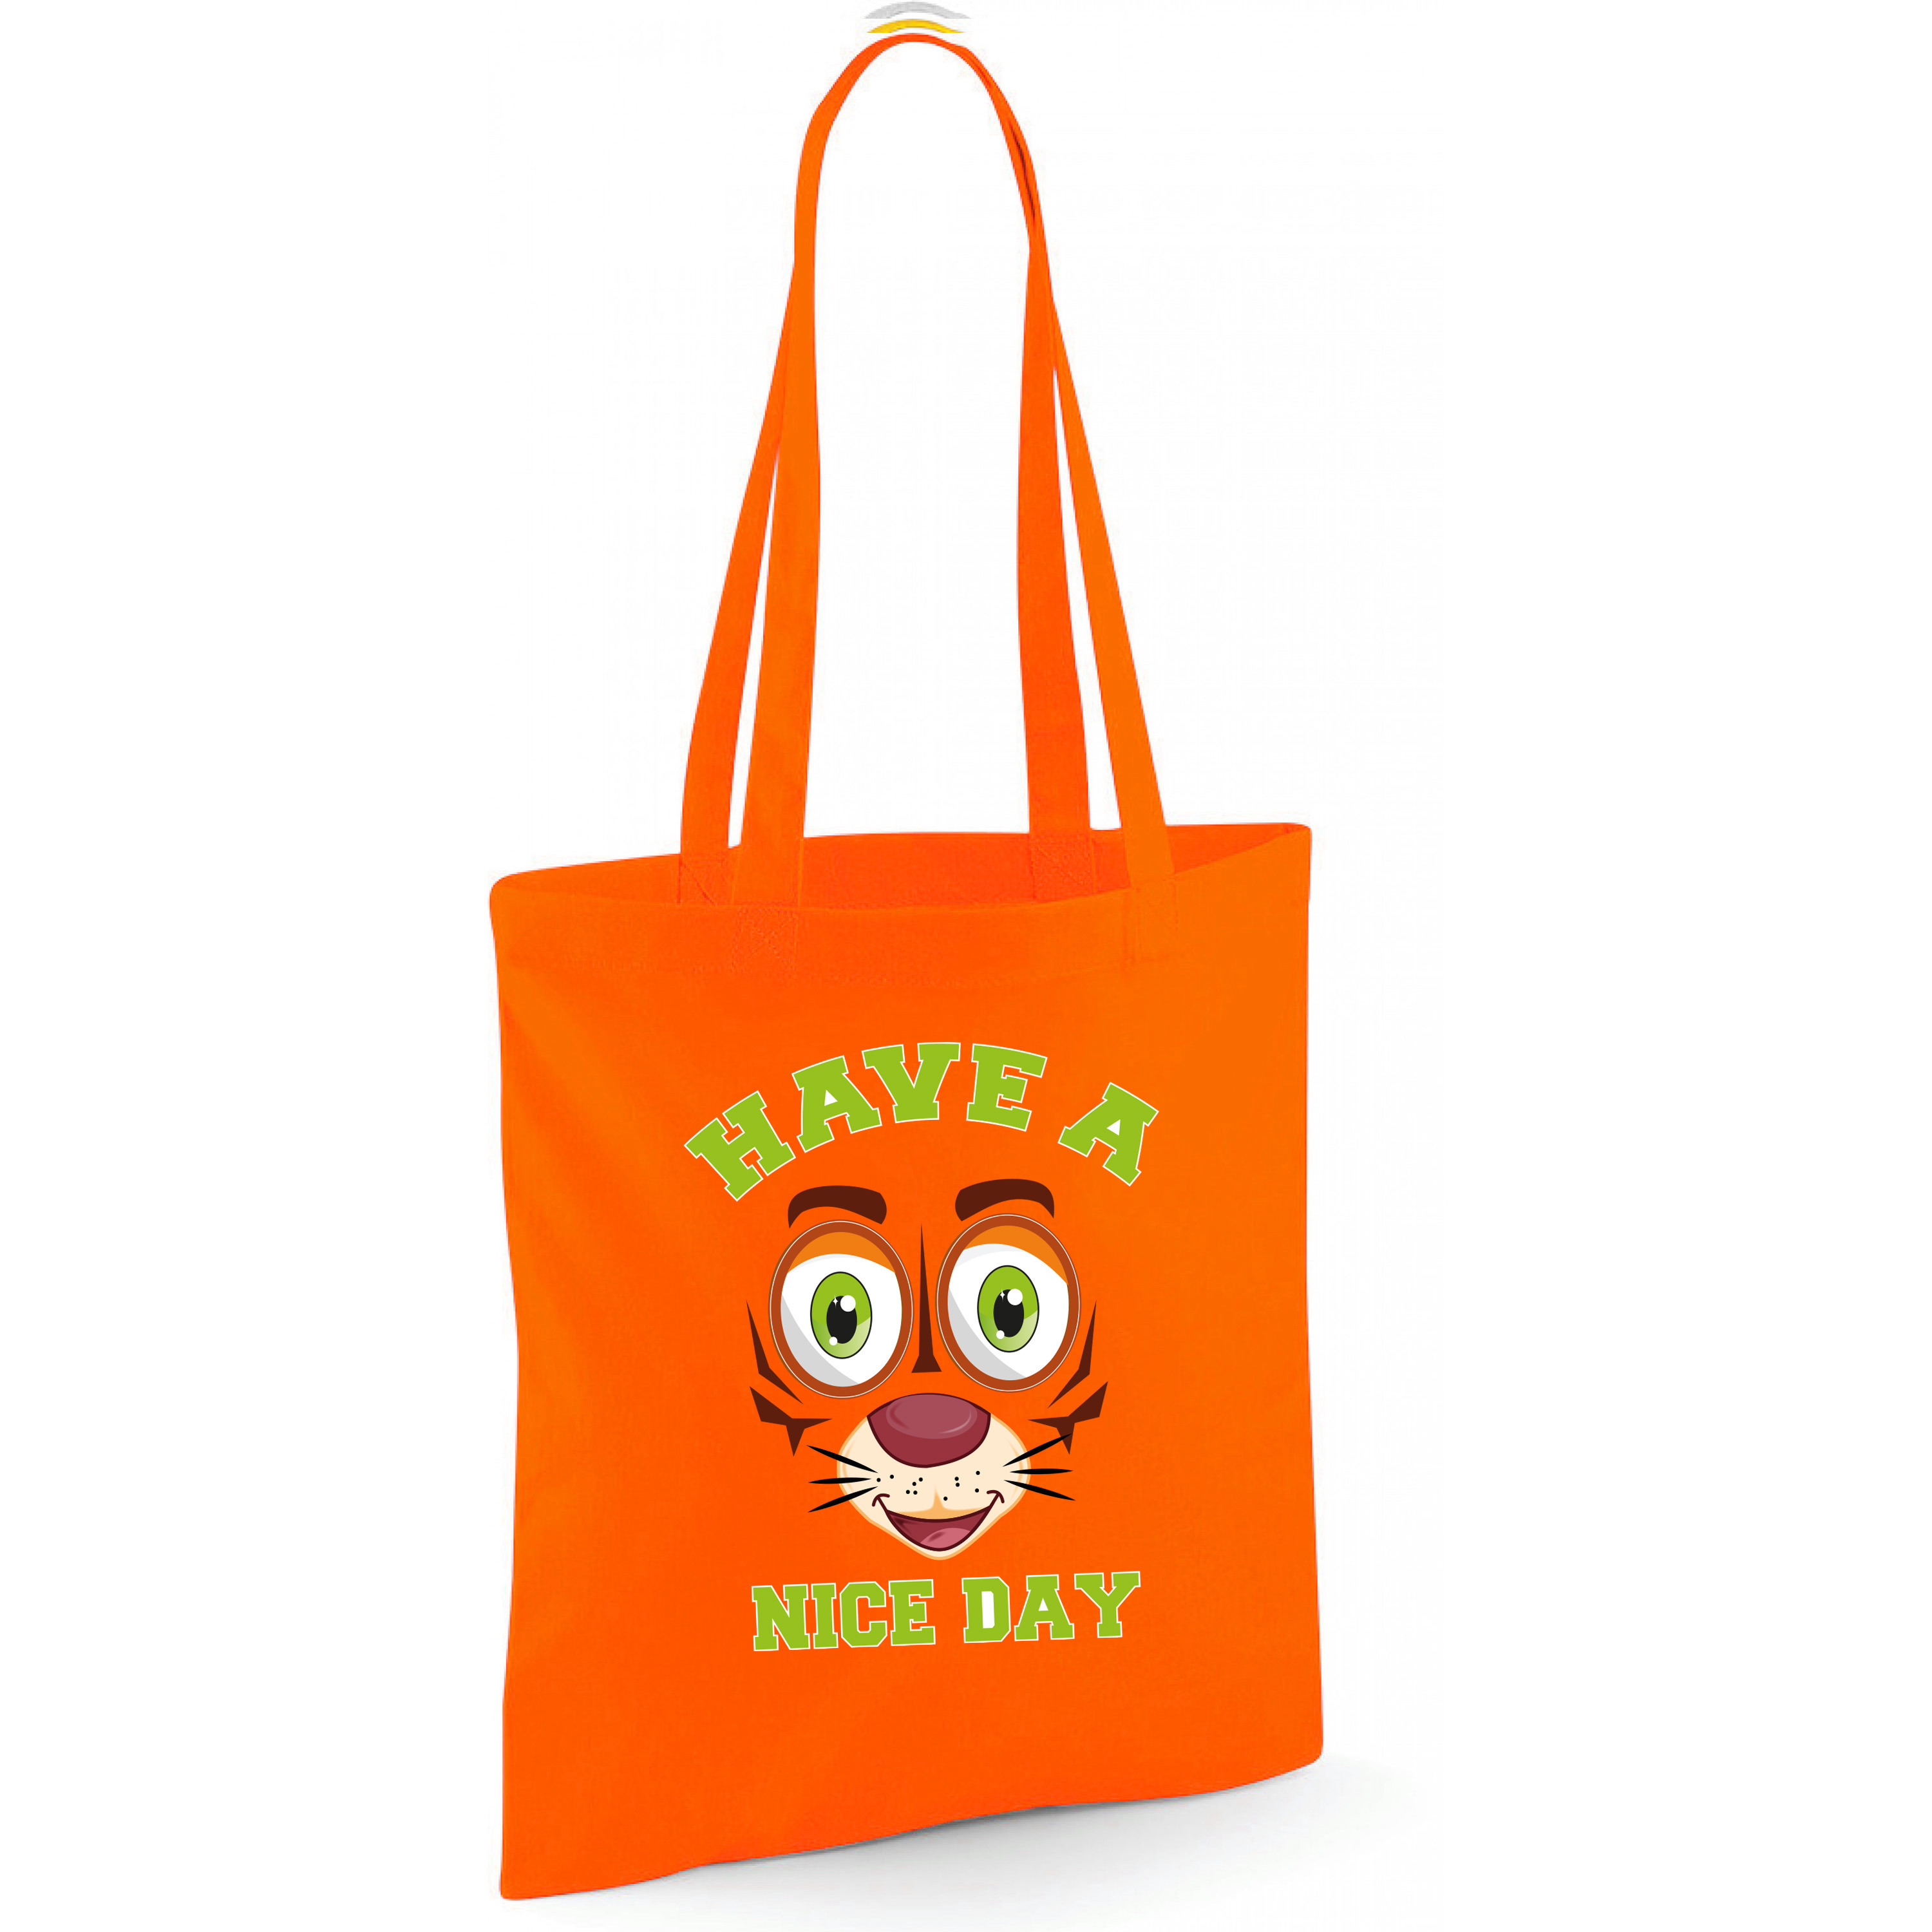 Schoudertas jongens tijger oranje have a nice day 42 x 38 cm shopper-tote bag